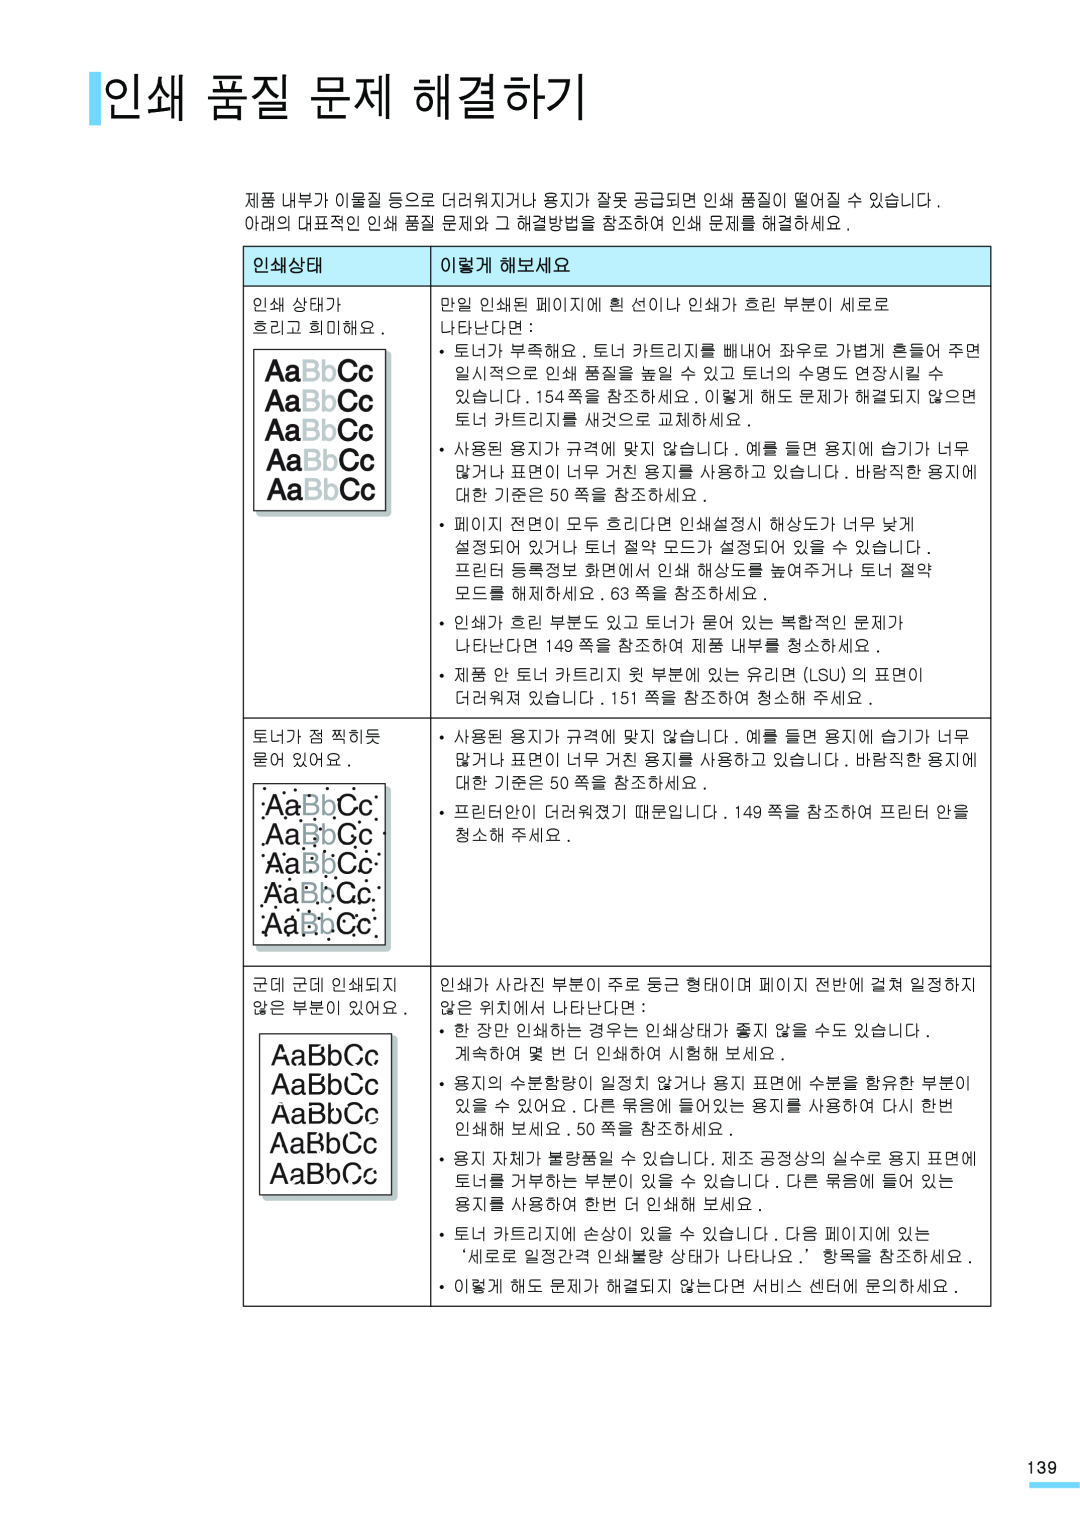 Samsung ML-2571N manual 인쇄 품질 문제 해결하기, Aa BbCc 